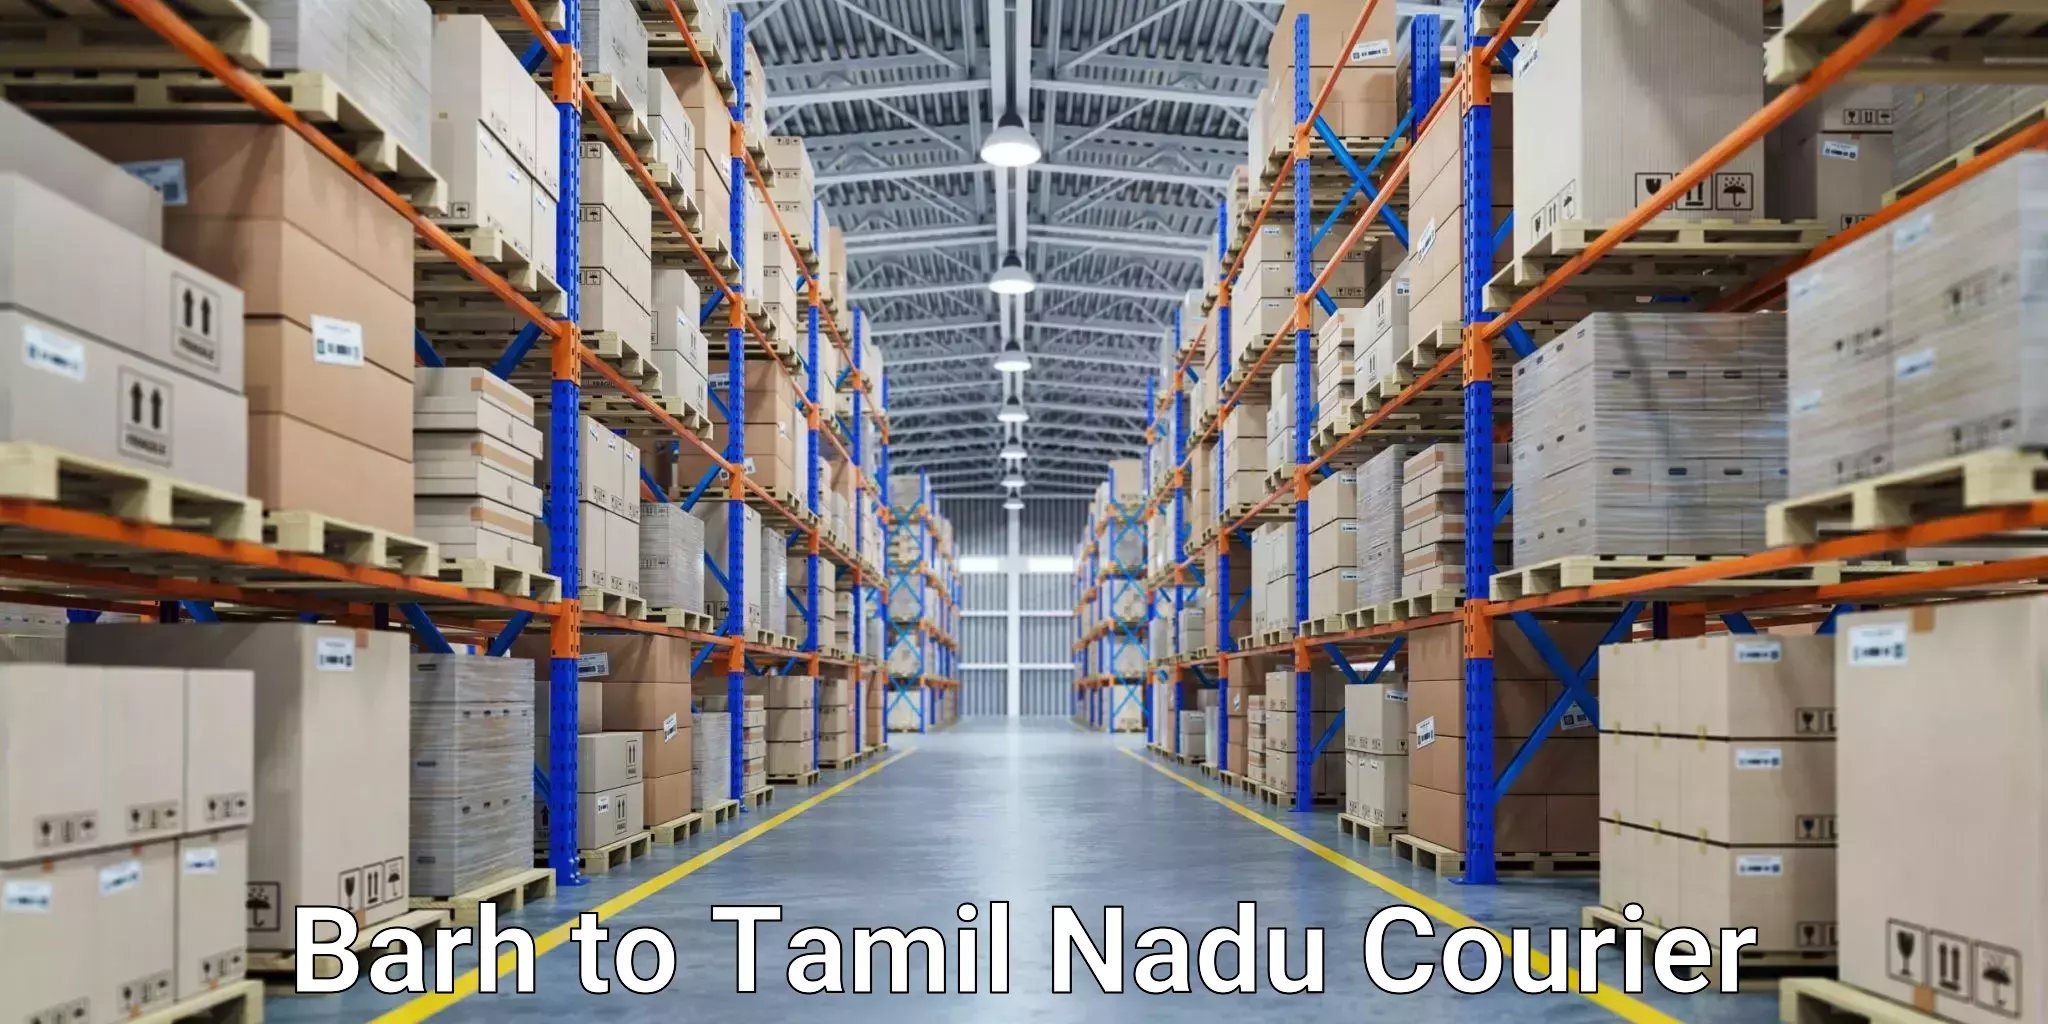 Nationwide courier service Barh to Thiruvadanai